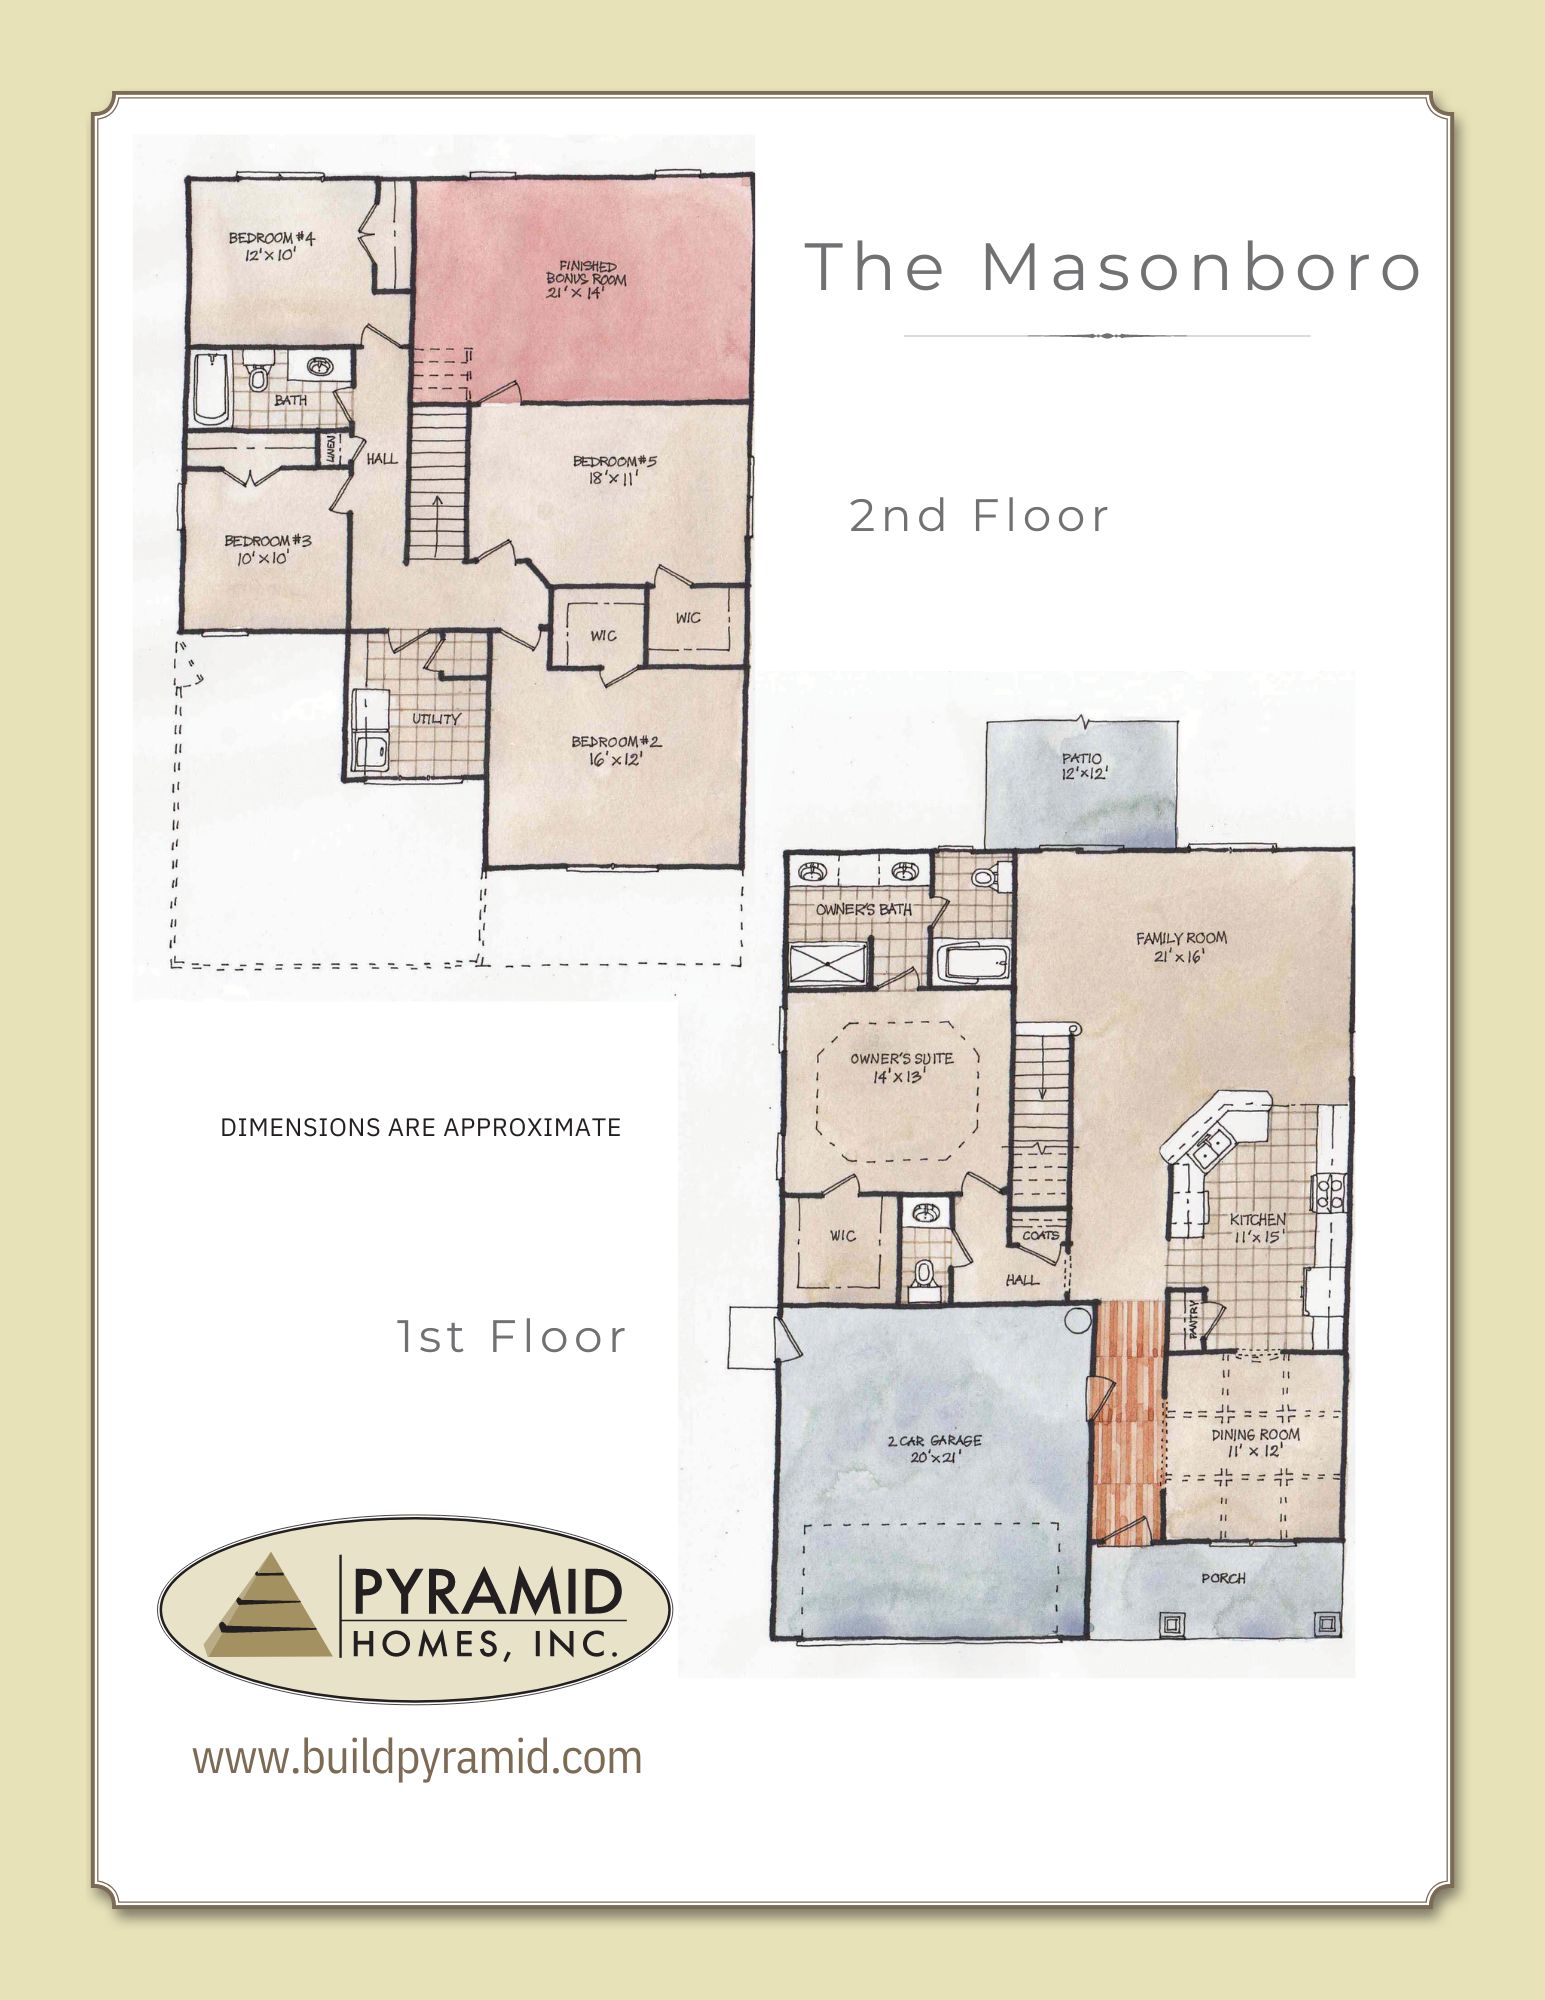 The Masonboro floor plan image